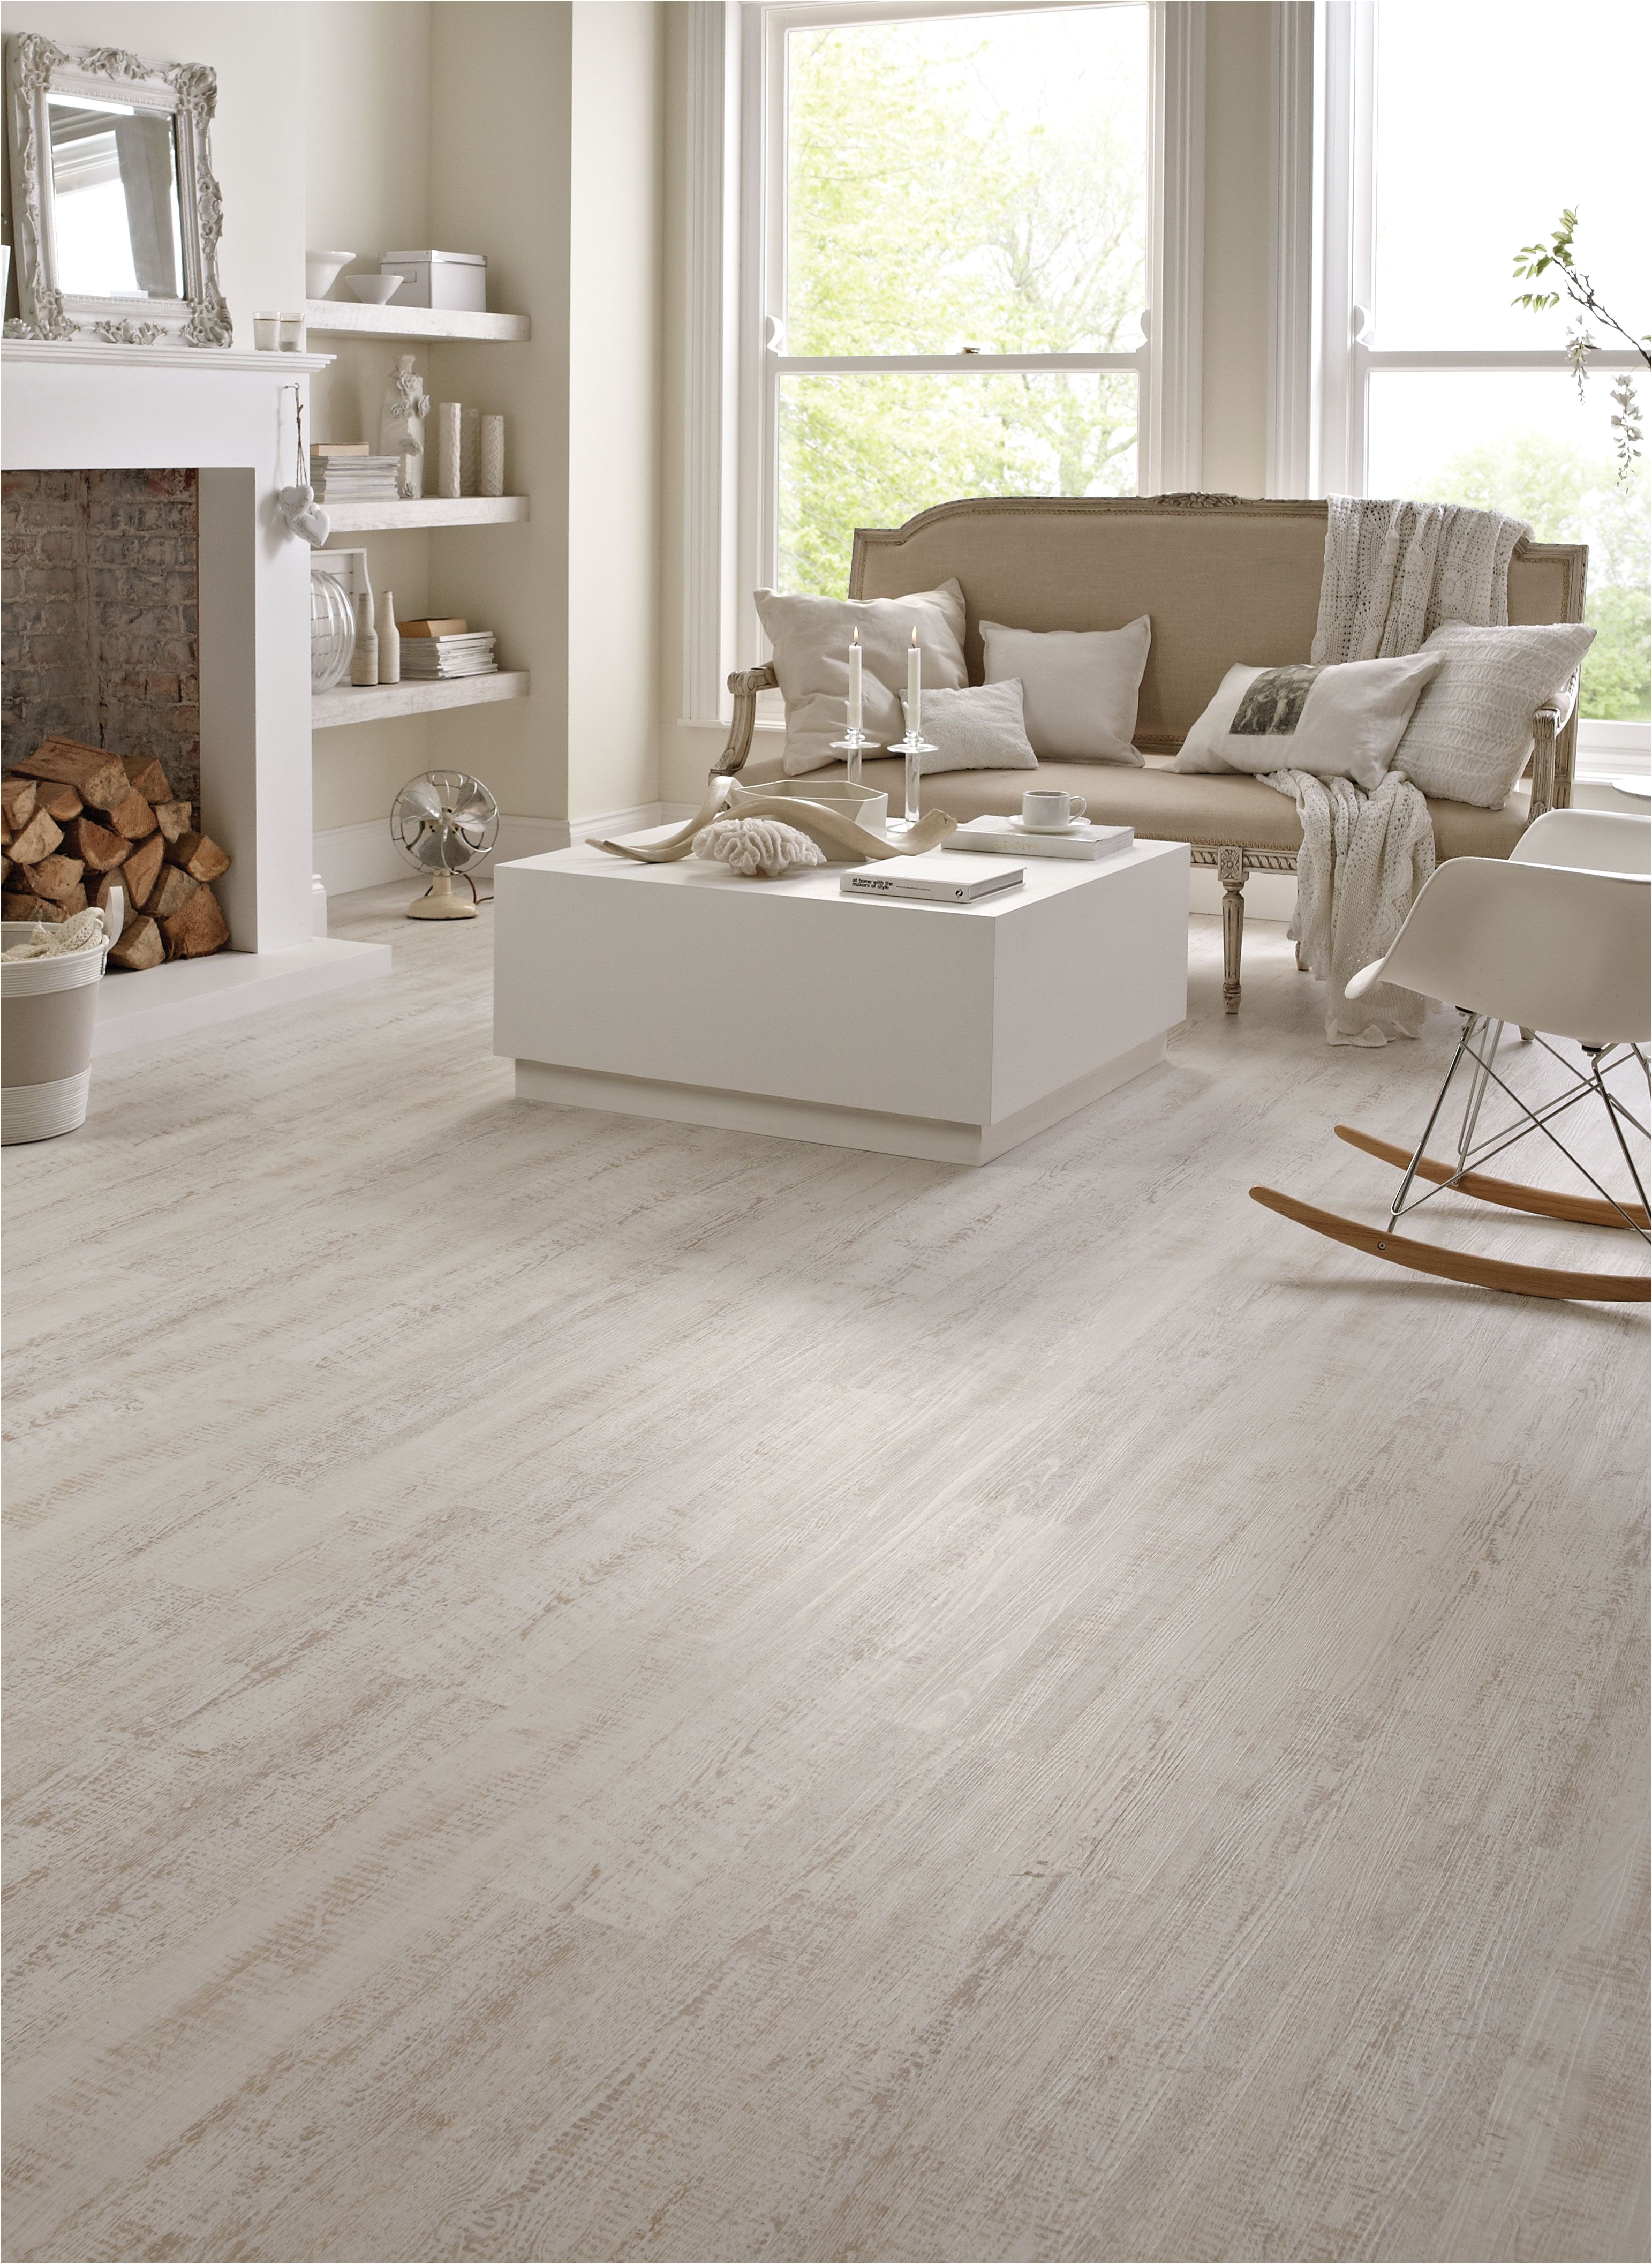 karndean wood flooring white painted oak by karndeanfloors available from rodgers of york flooring interiors